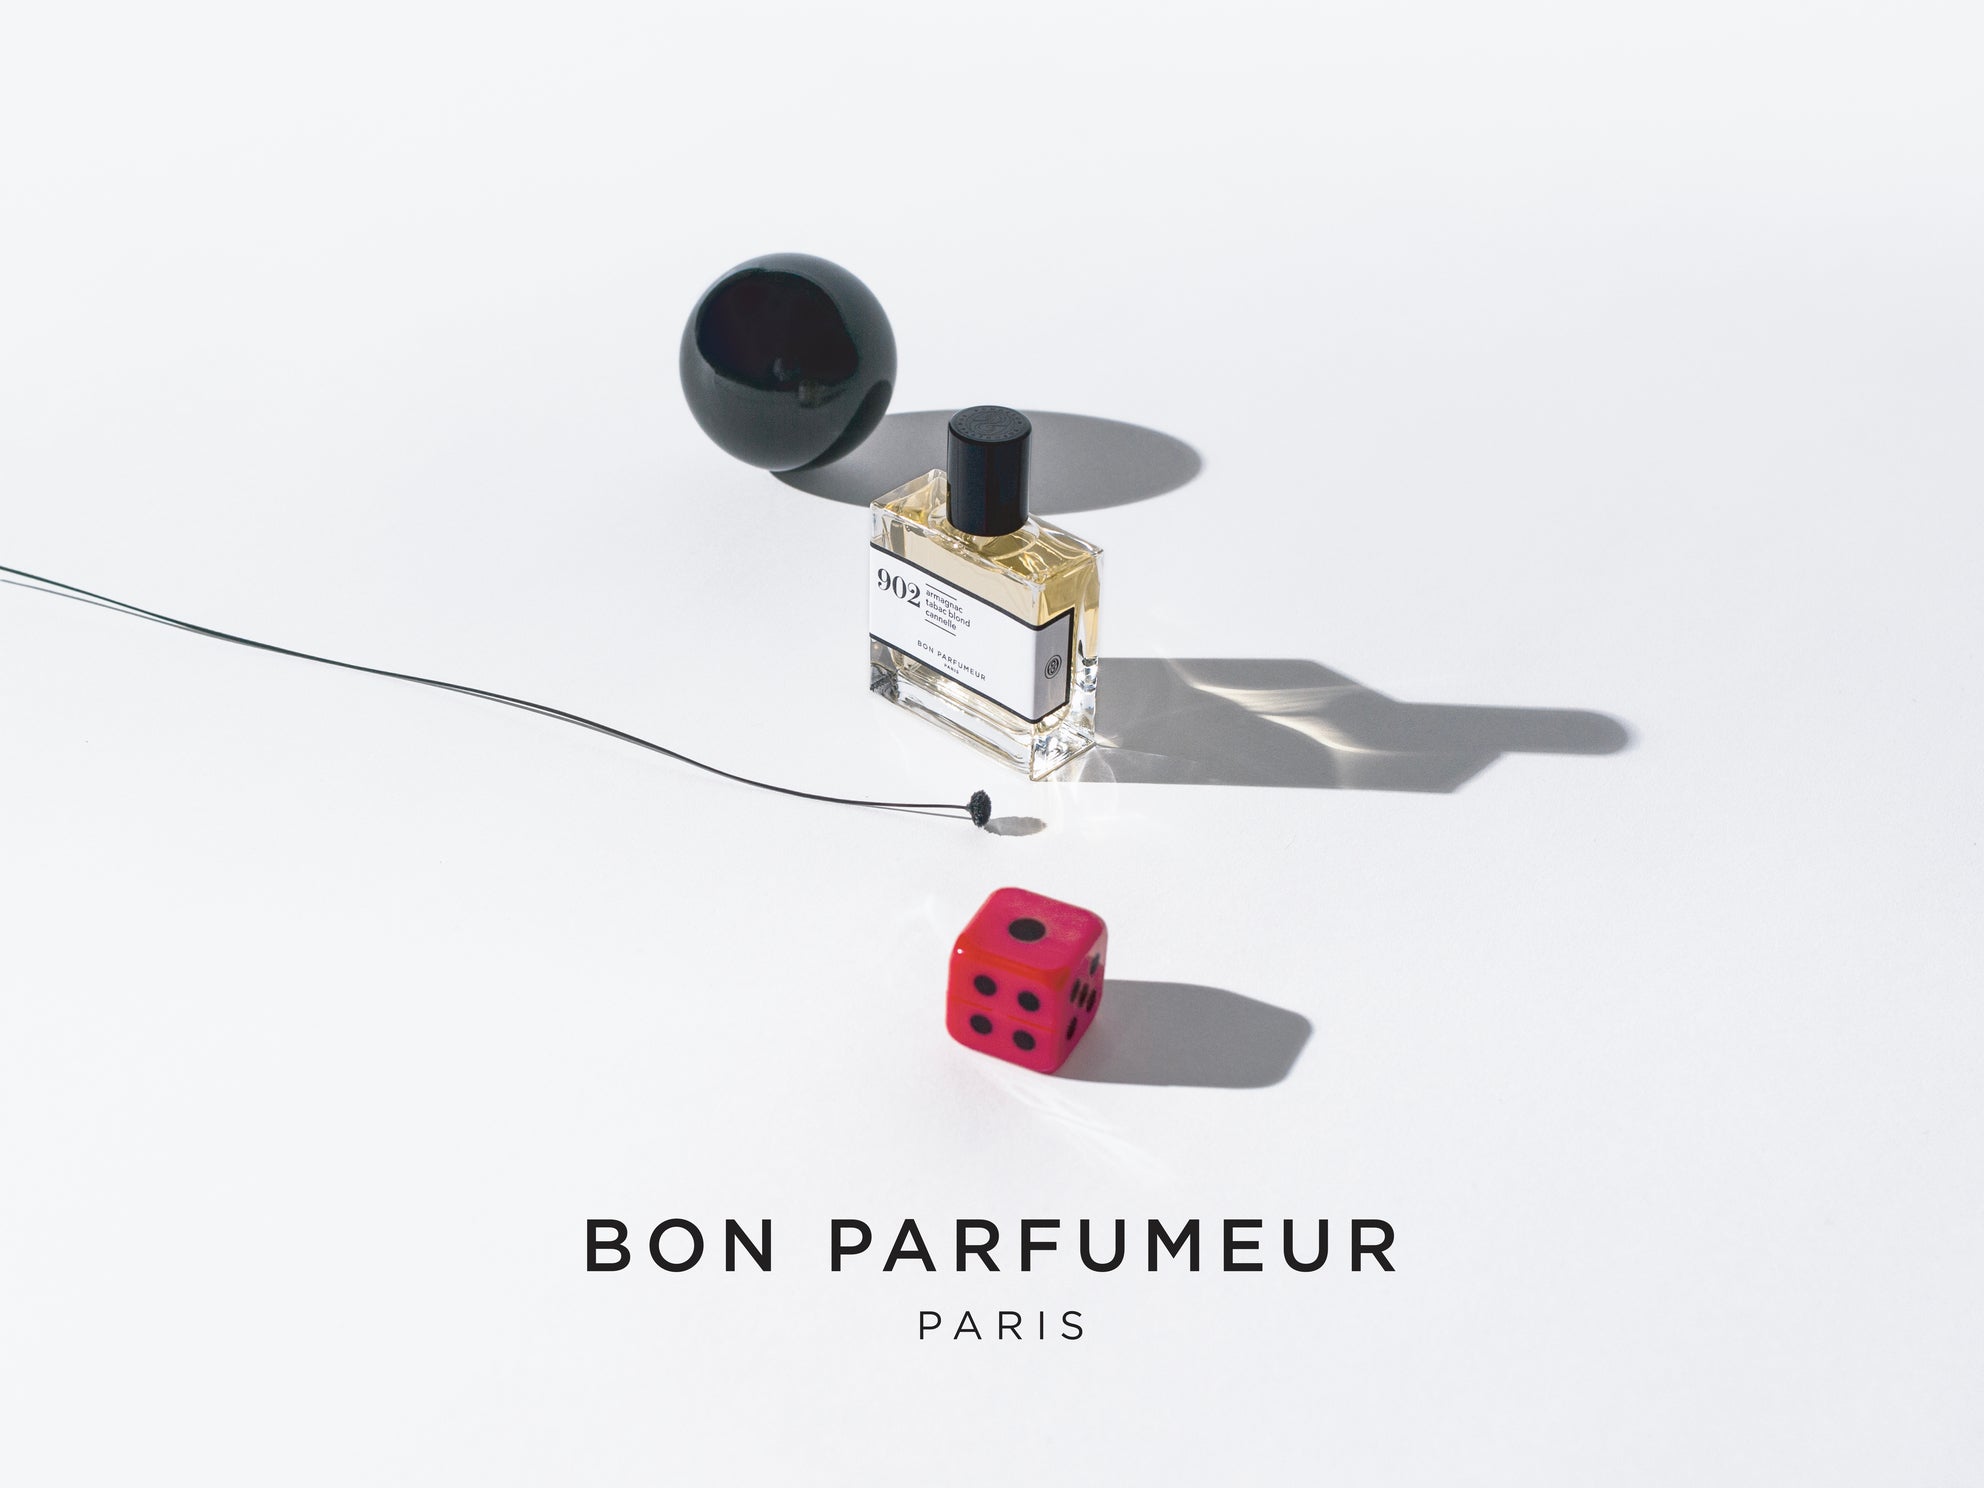 Bon Parfumeur - Les Classiques 601 - Danae Profumeria